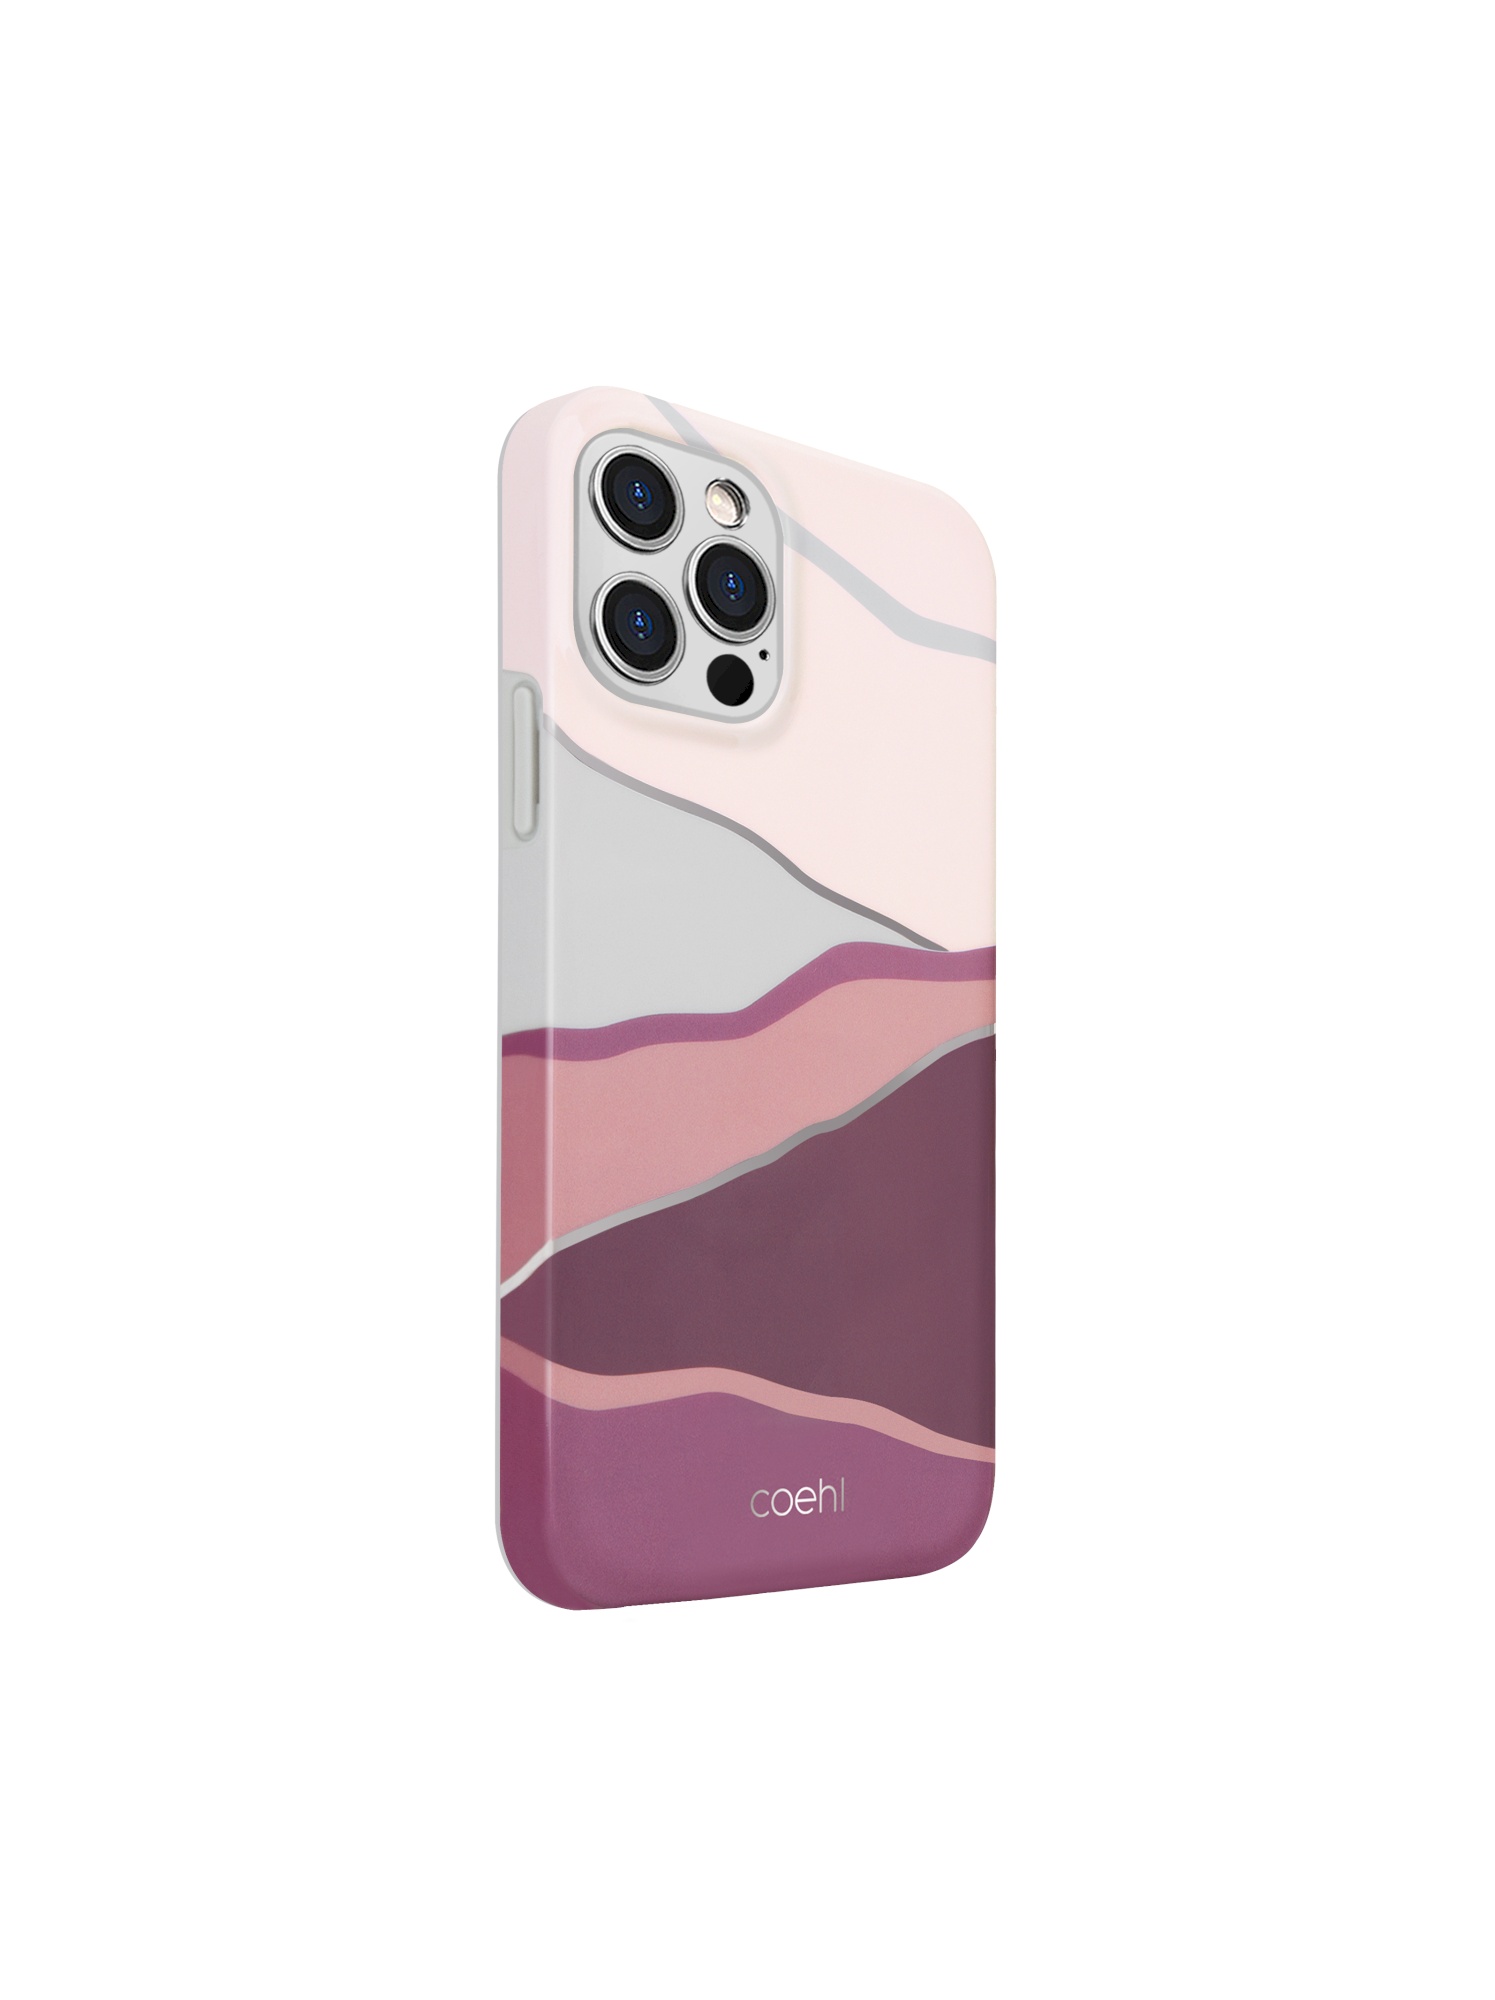 iPhone 12 Pro Max, housse coehl ciel sunset pink, rose